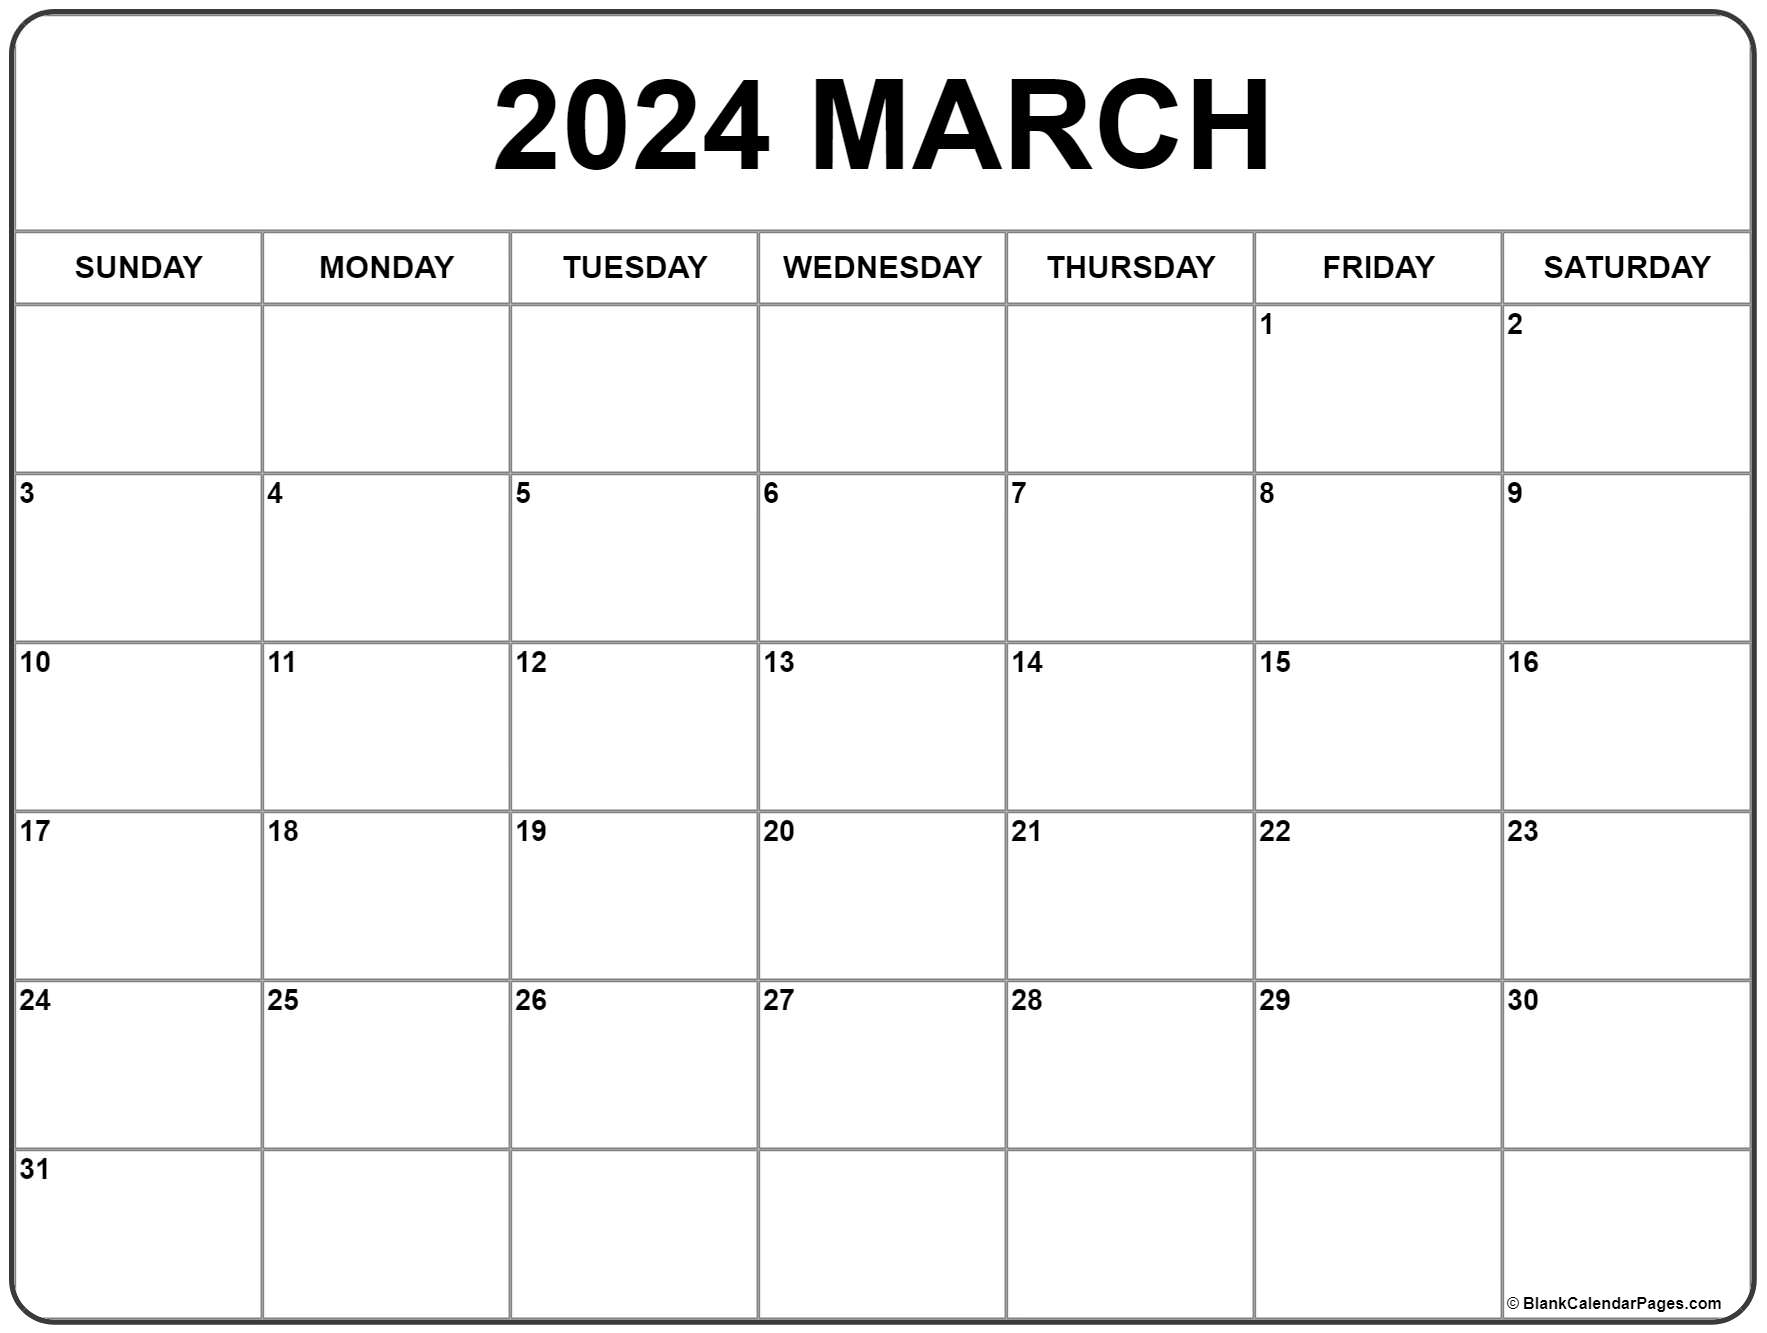 Free March 2022 Calendar March 2022 Calendar | Free Printable Calendar Templates